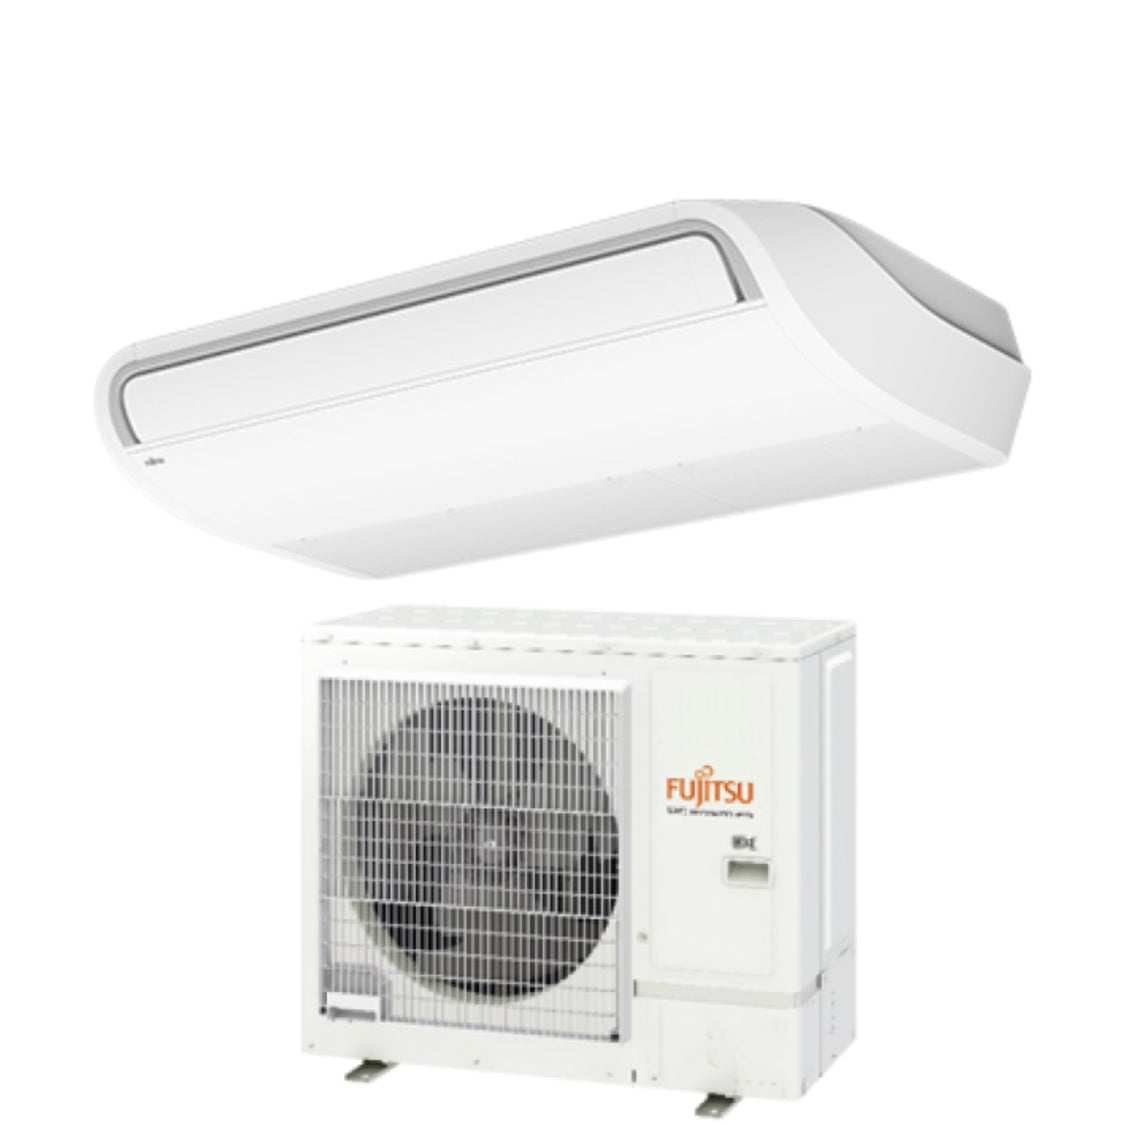 Fujitsu Inverter Ceiling Air Conditioner Eco Kr 36000 Btu Abyg36krta Aoyg36kqta R 32 3ngf83105 7955